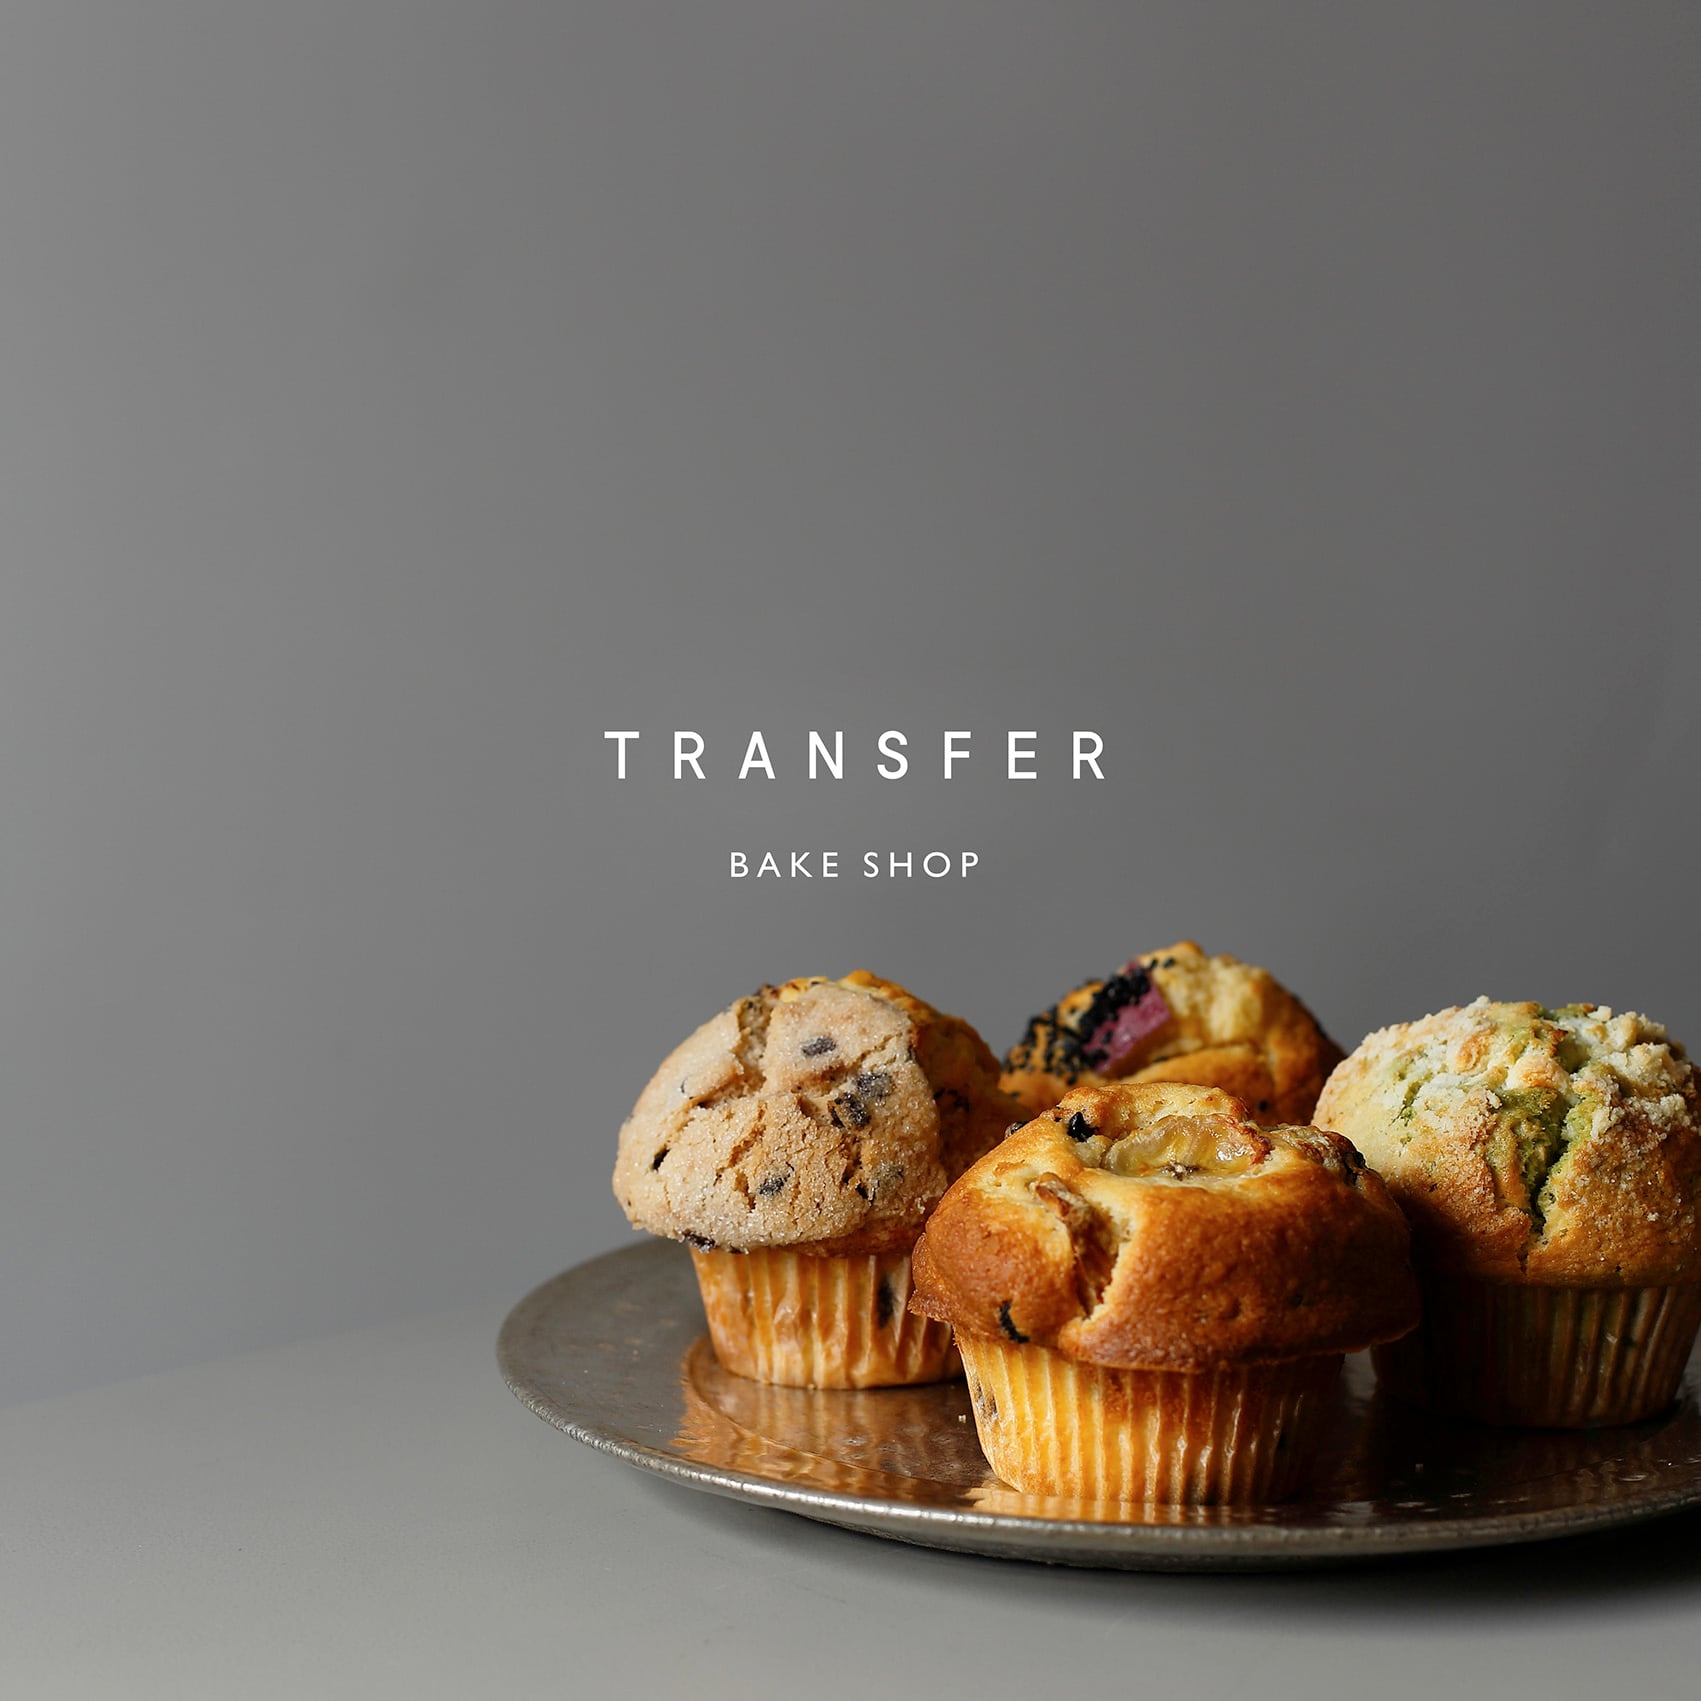 TRANSFER Bake Shop